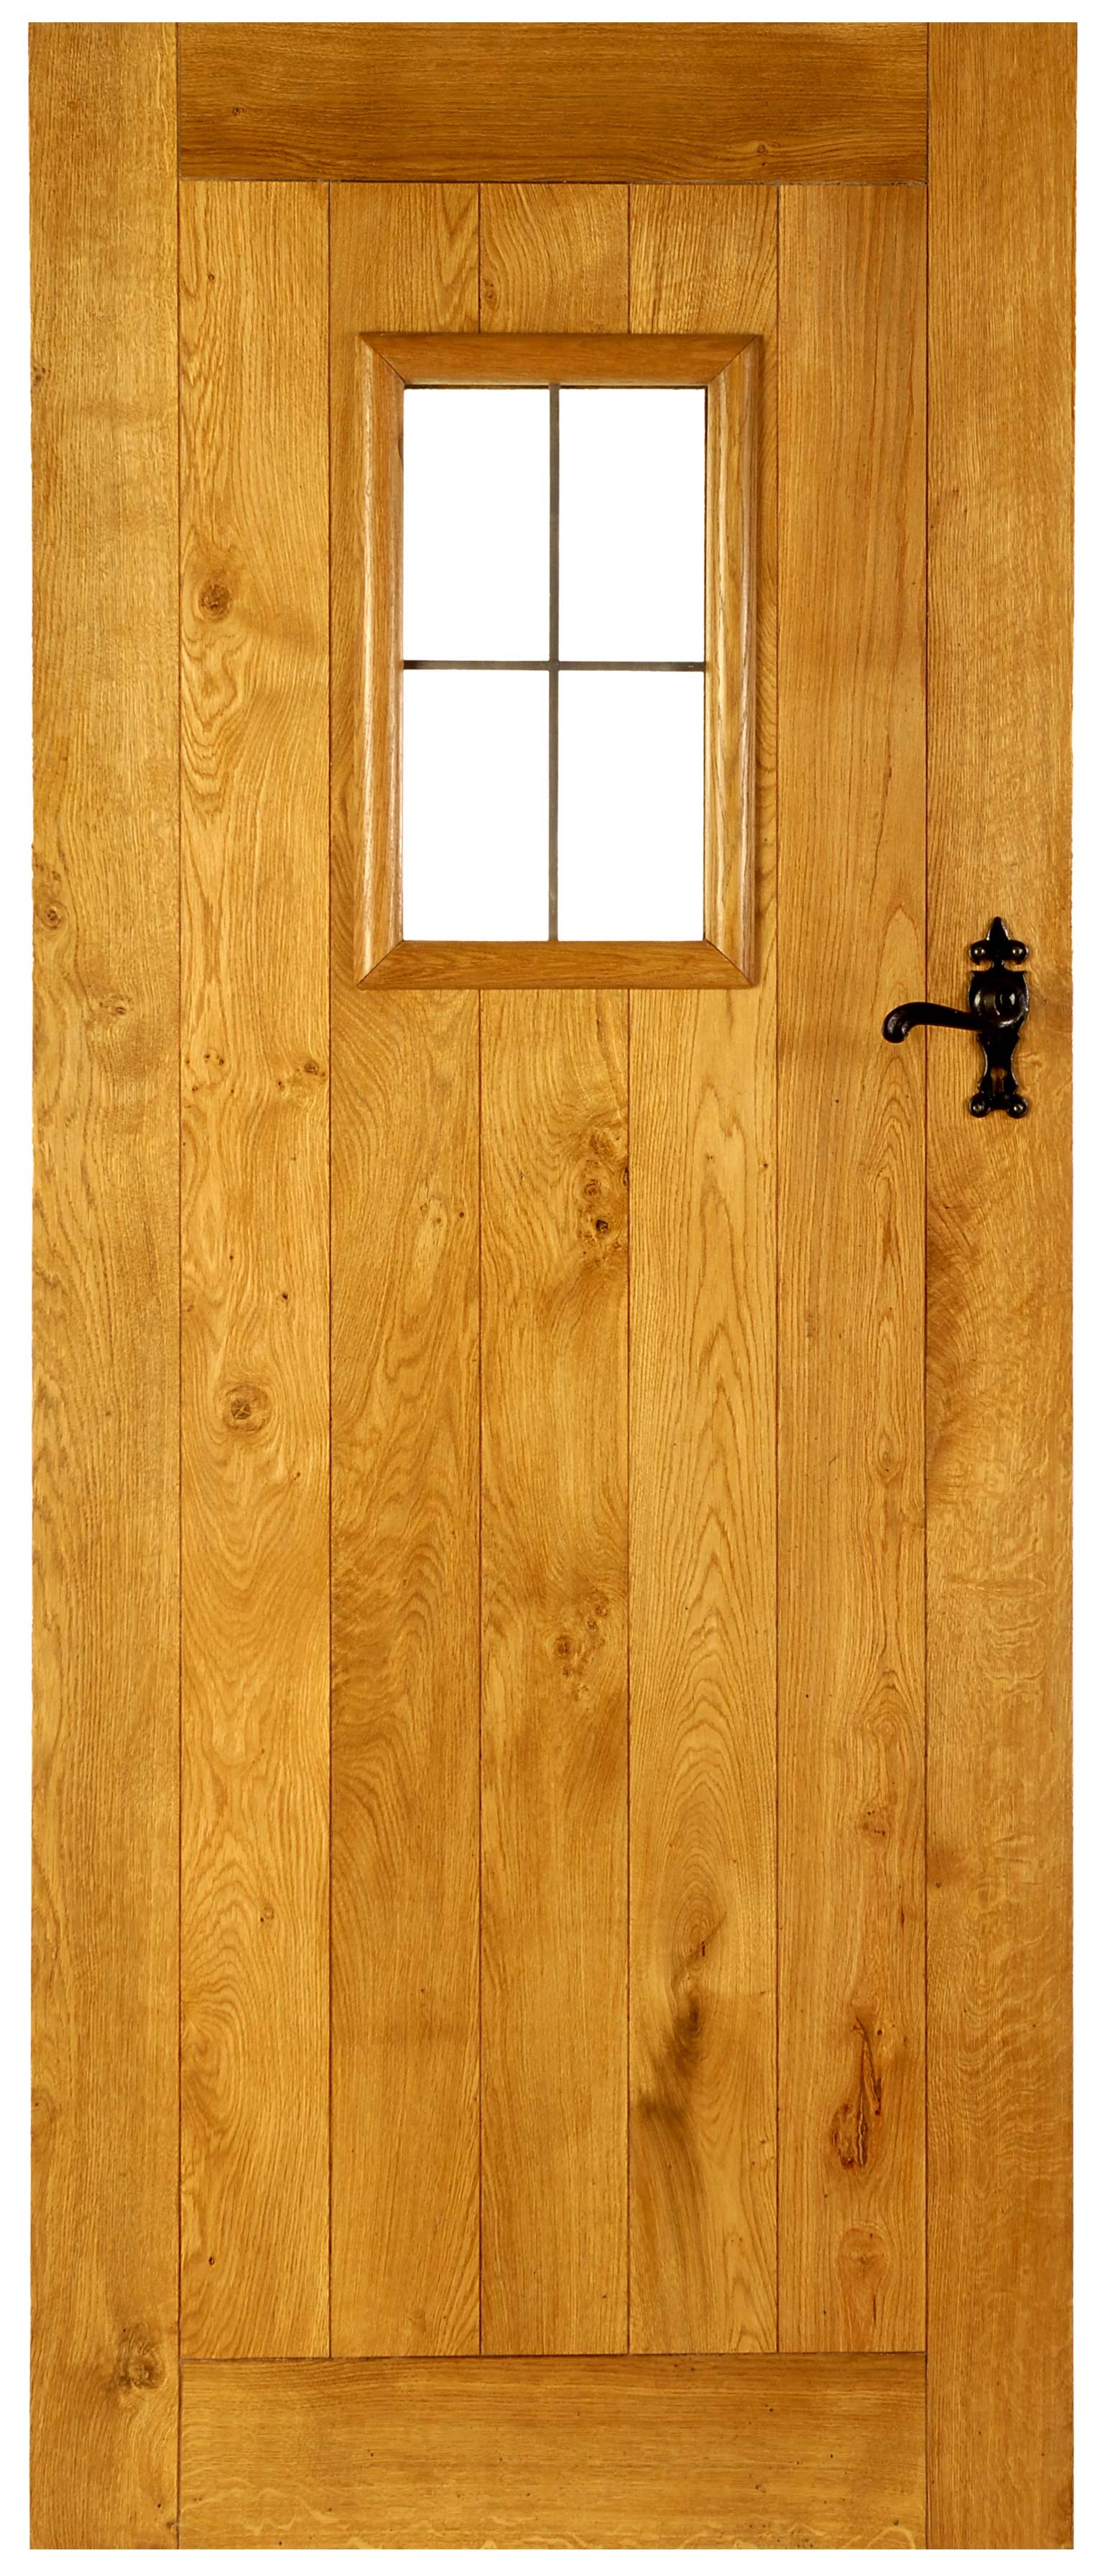 An image of OX-Bow External Solid Oak Door